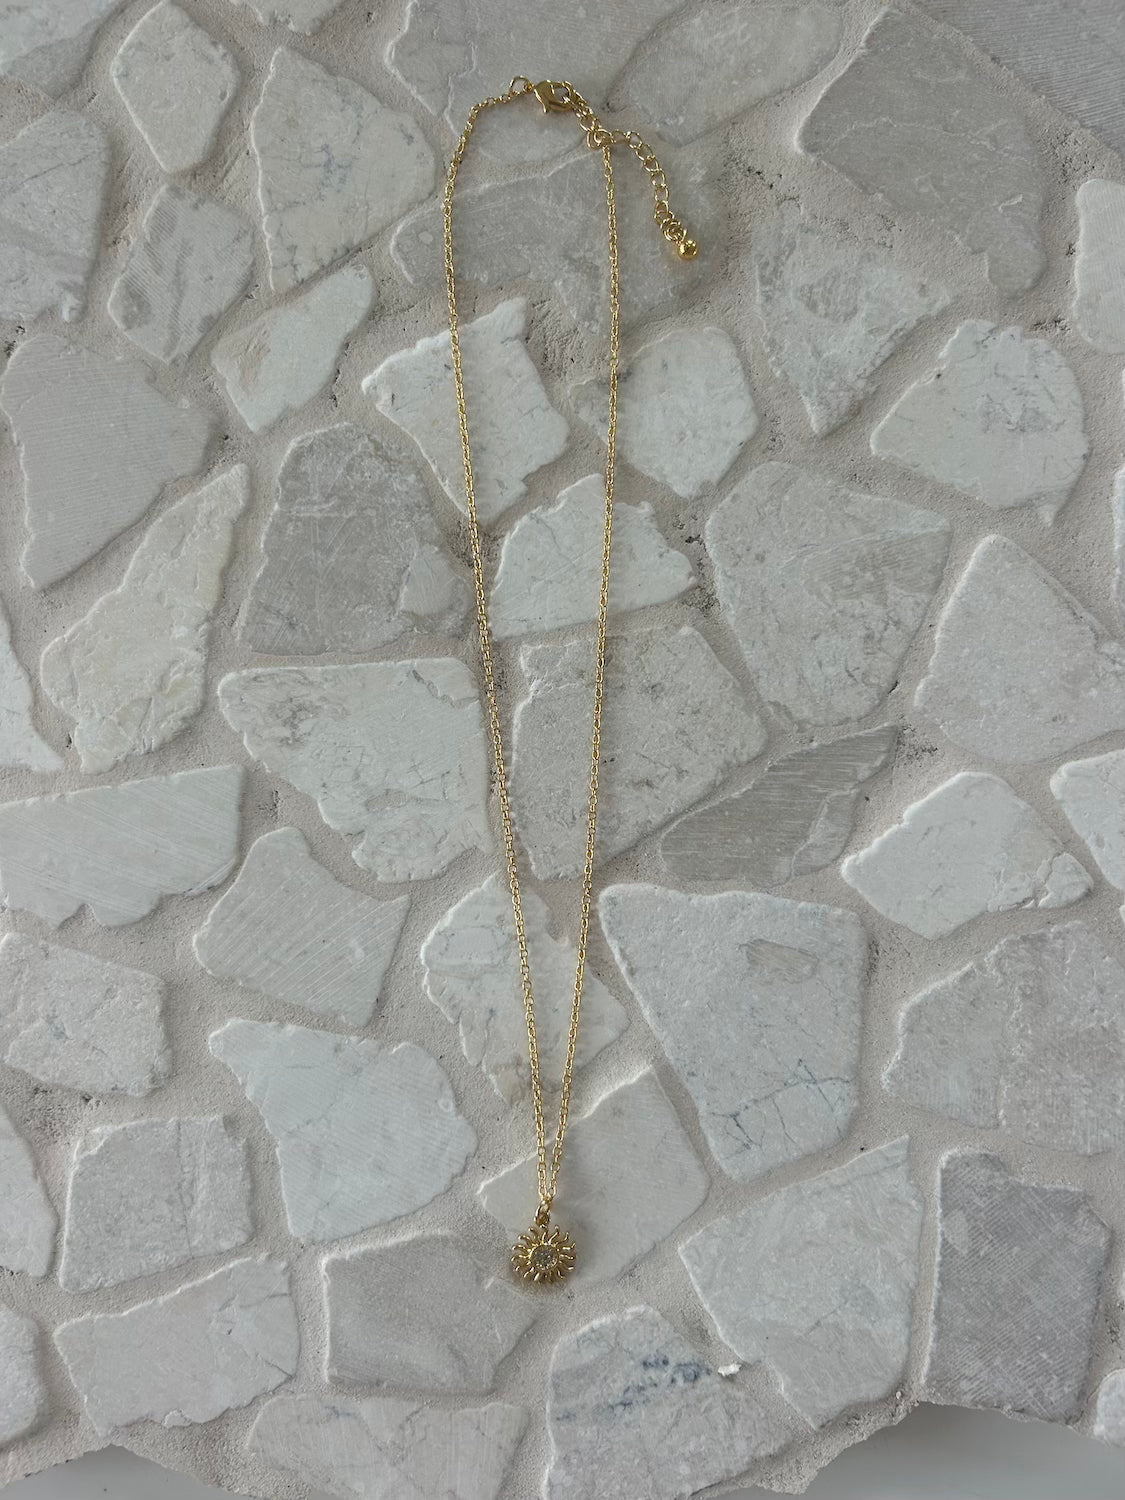 Sun Dancer necklace - 18k gold plated sun ray pendant on chain - Malia Jewellery